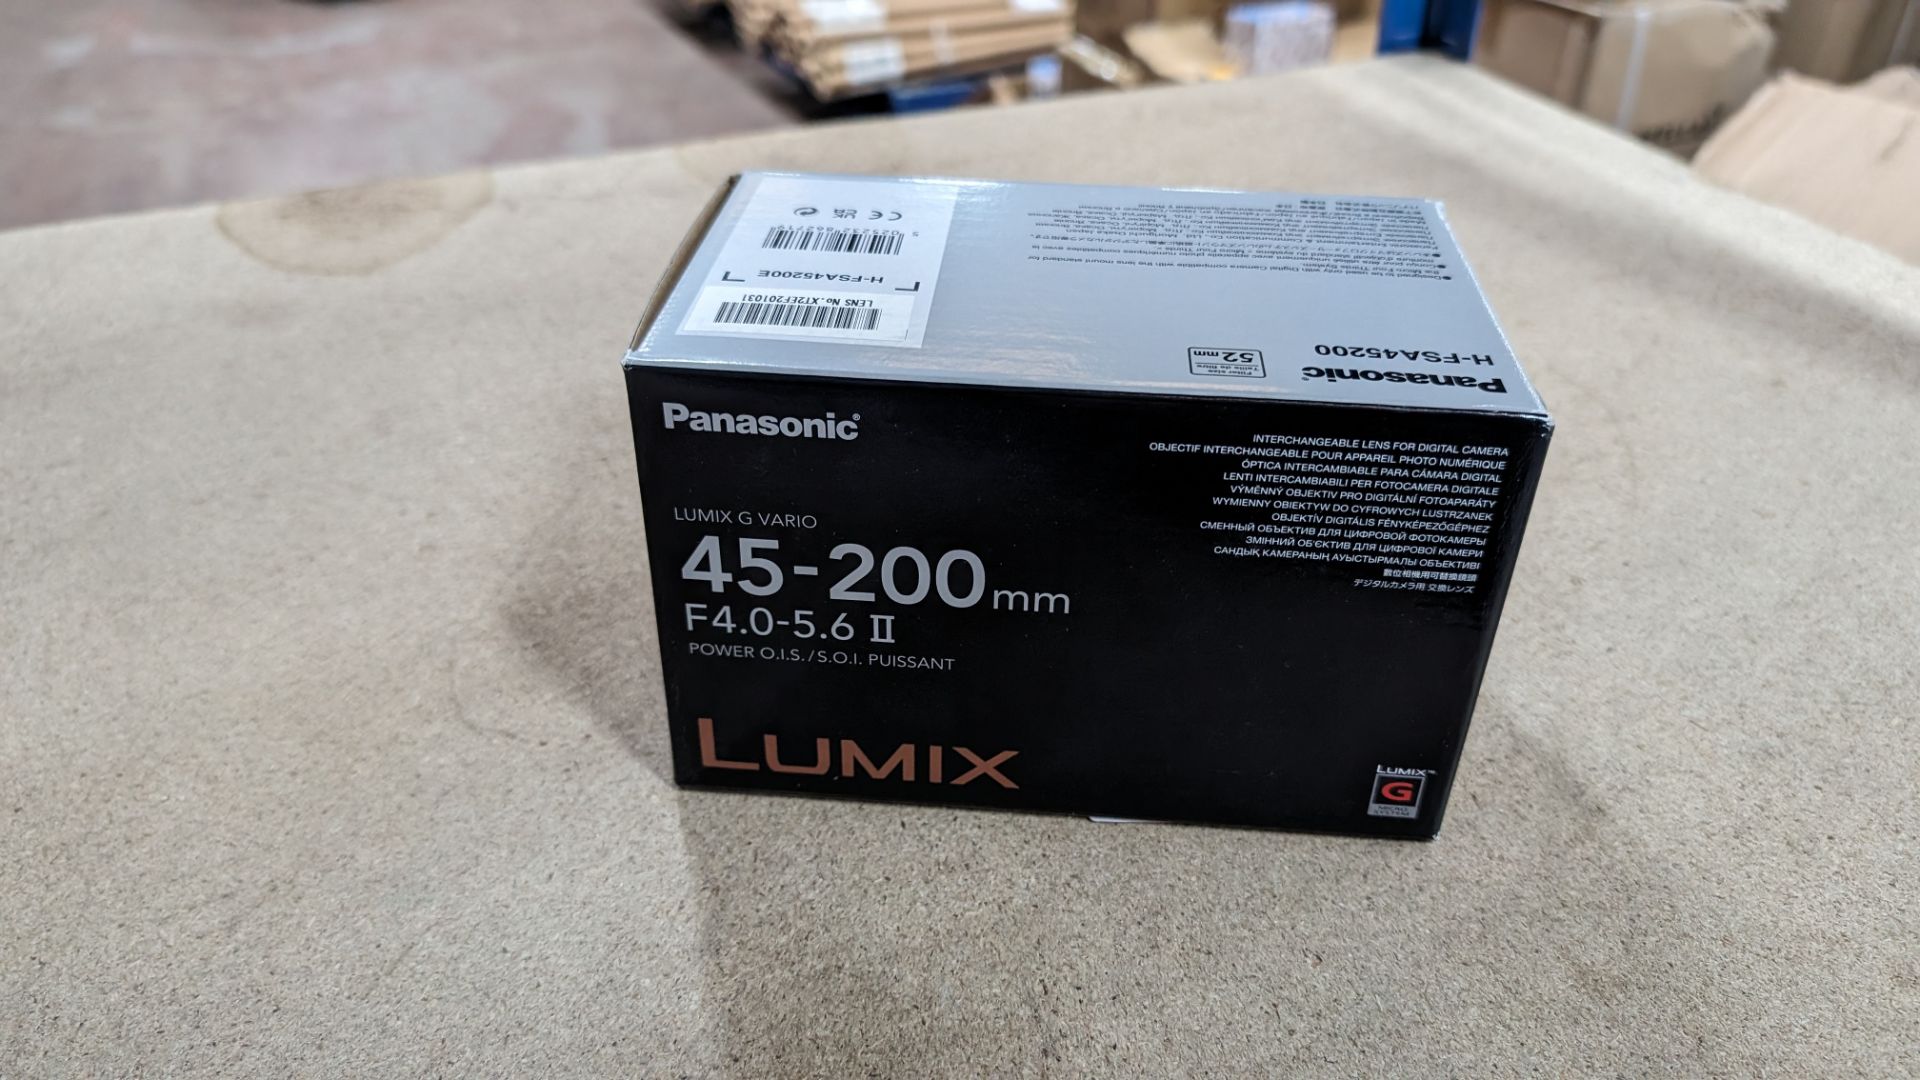 Panasonic Lumix G Vario 45-200mm lens, model H-FSA45200, f4.0-5.6 II - Image 5 of 6